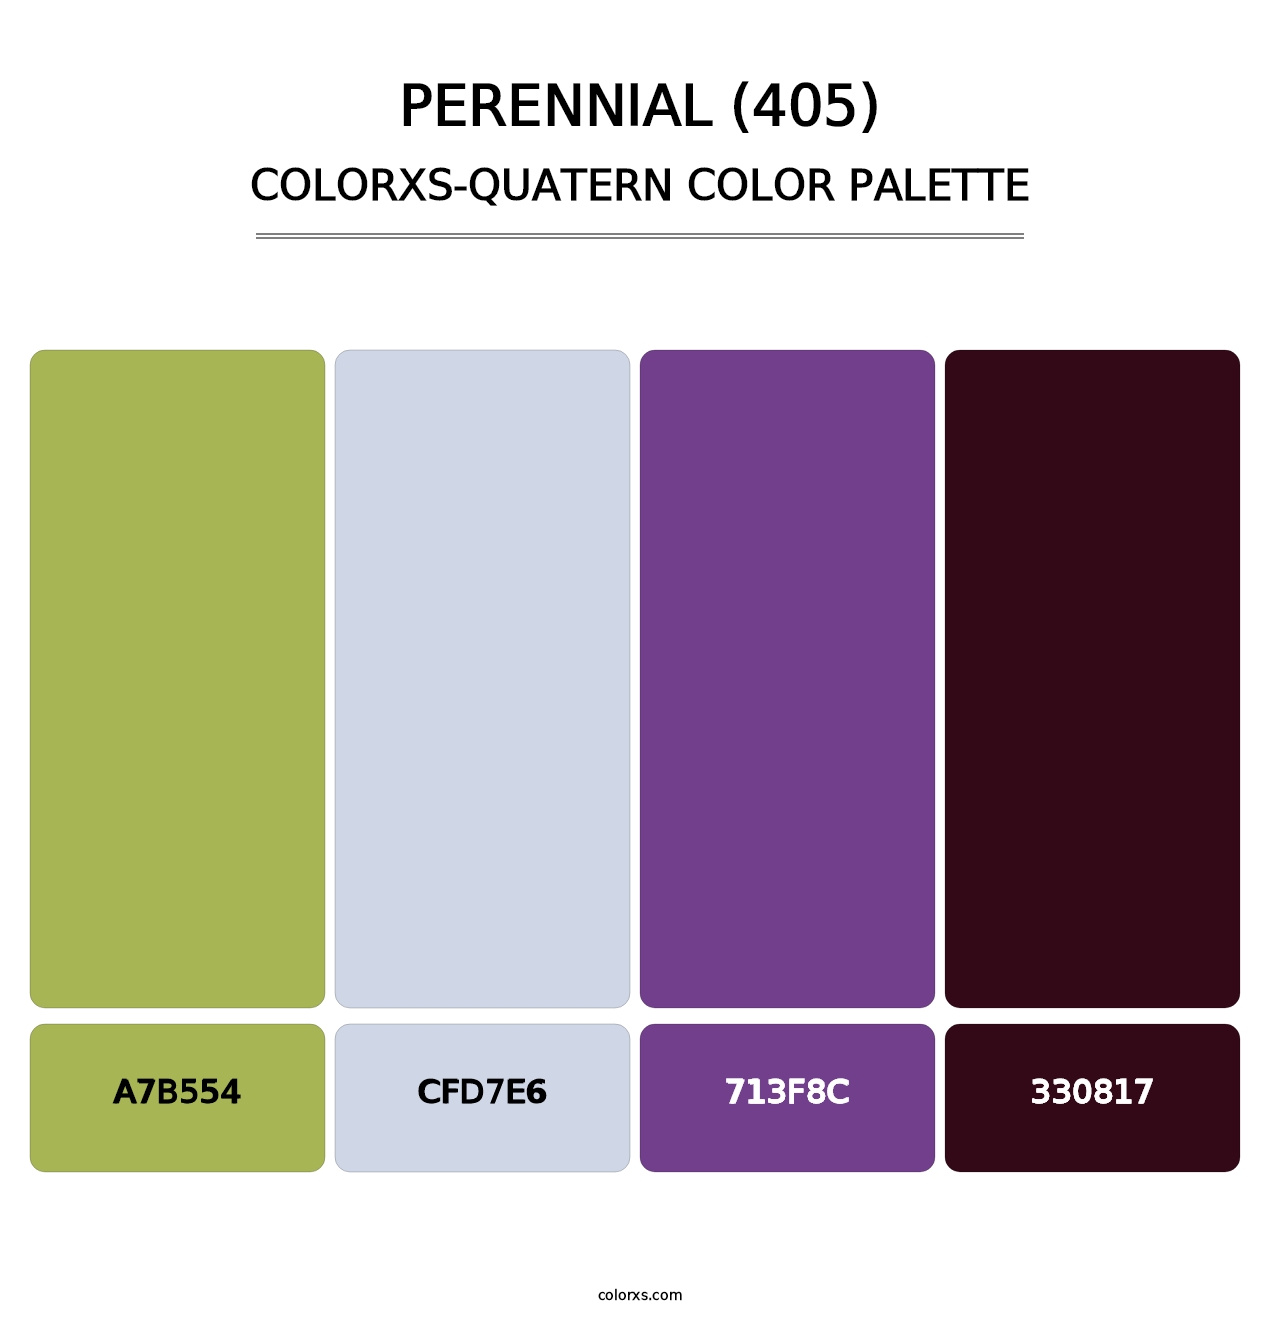 Perennial (405) - Colorxs Quatern Palette